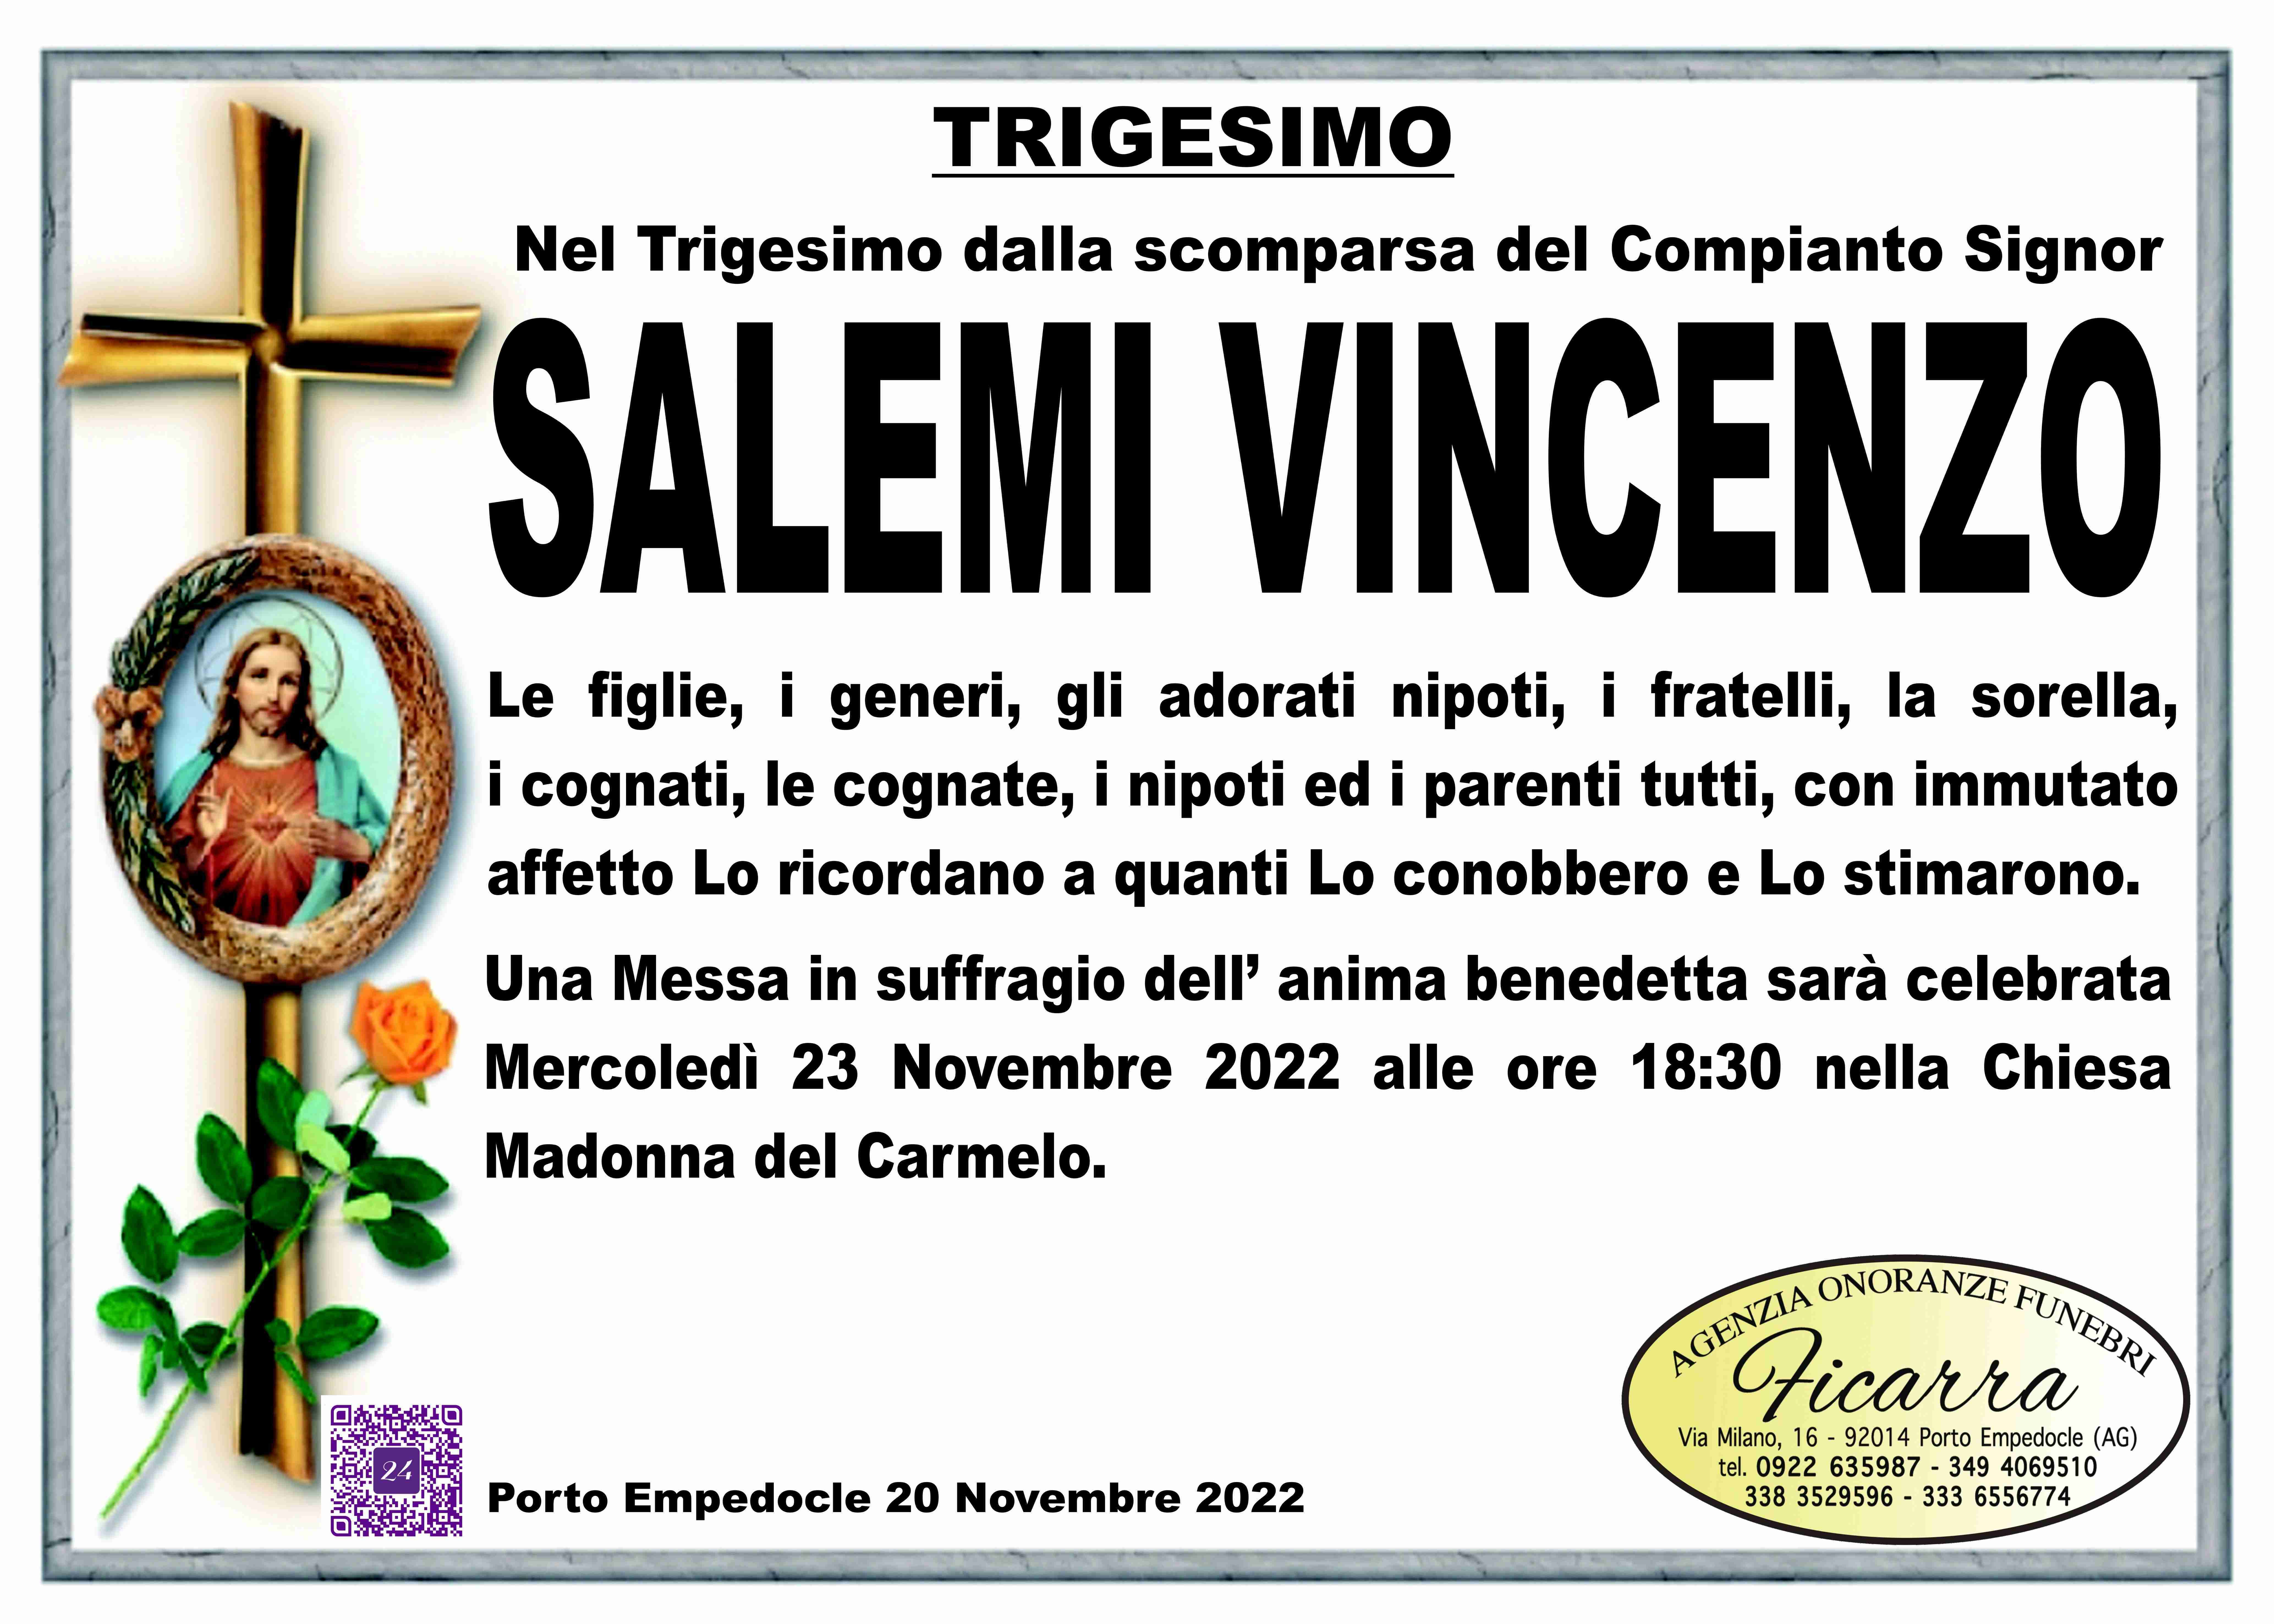 Vincenzo Salemi